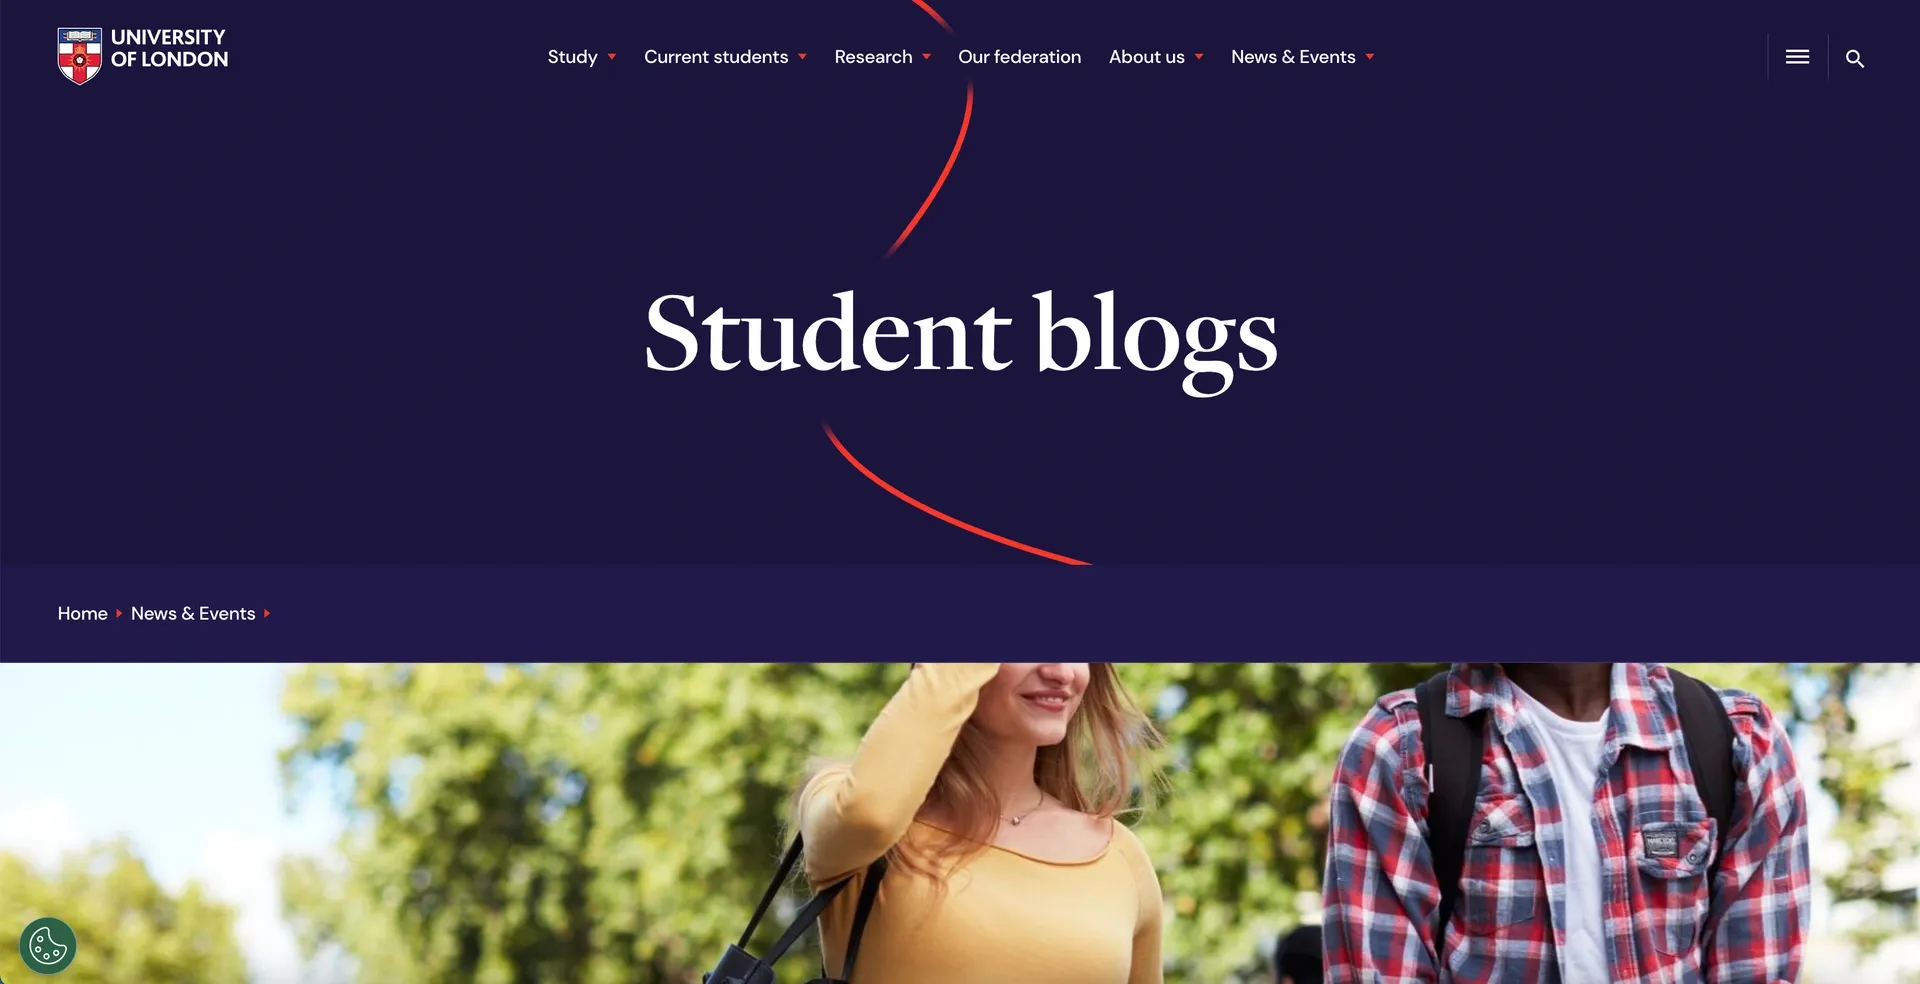 University of London student blogs web page